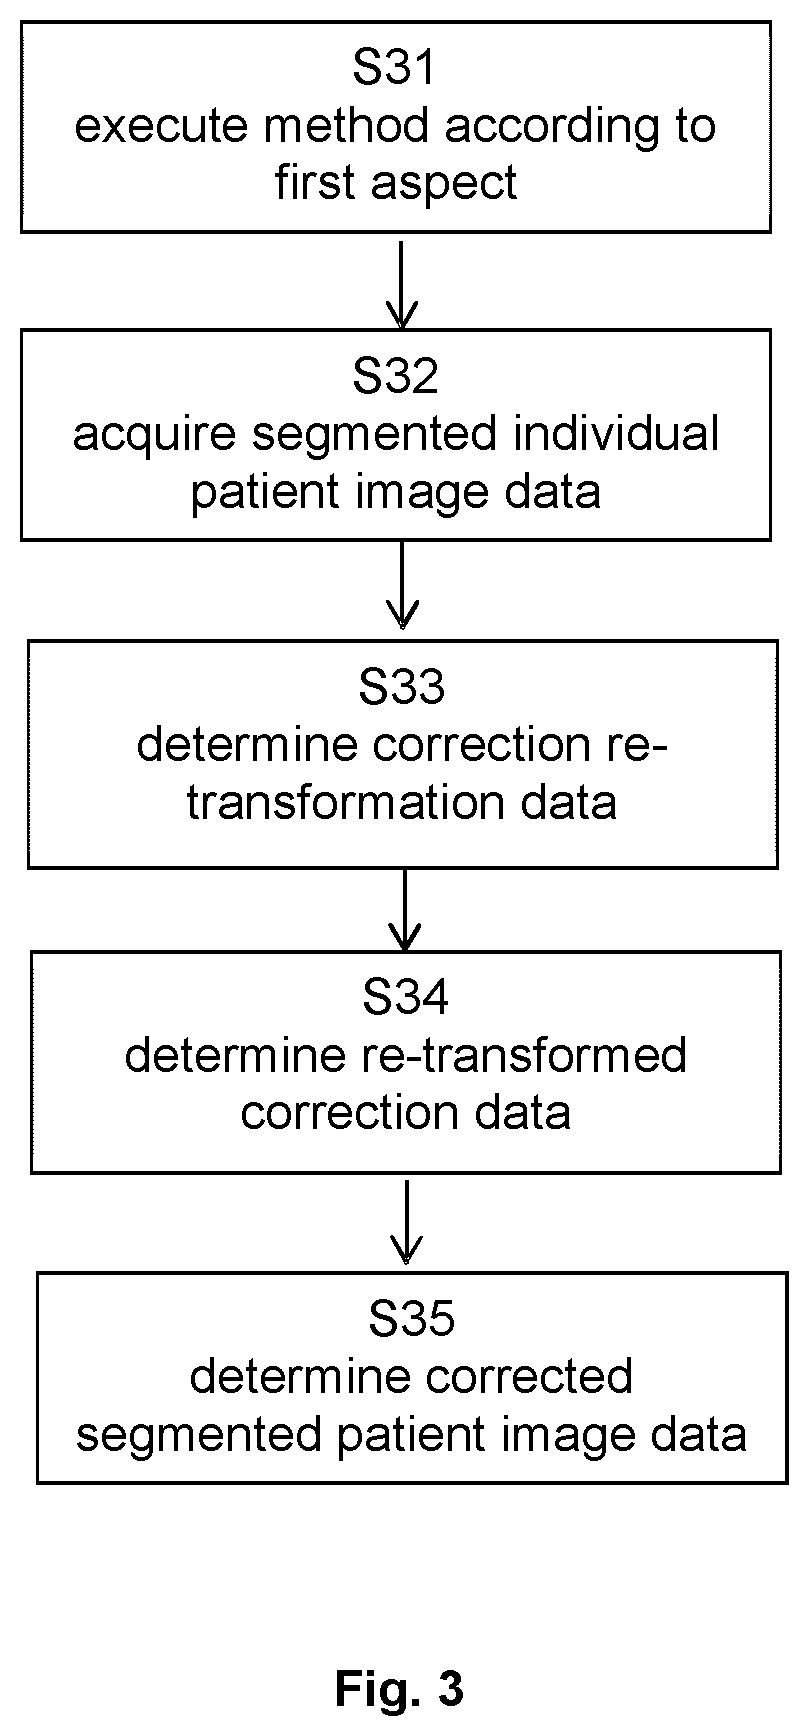 Correcting segmentation of medical images using a statistical analysis of historic corrections